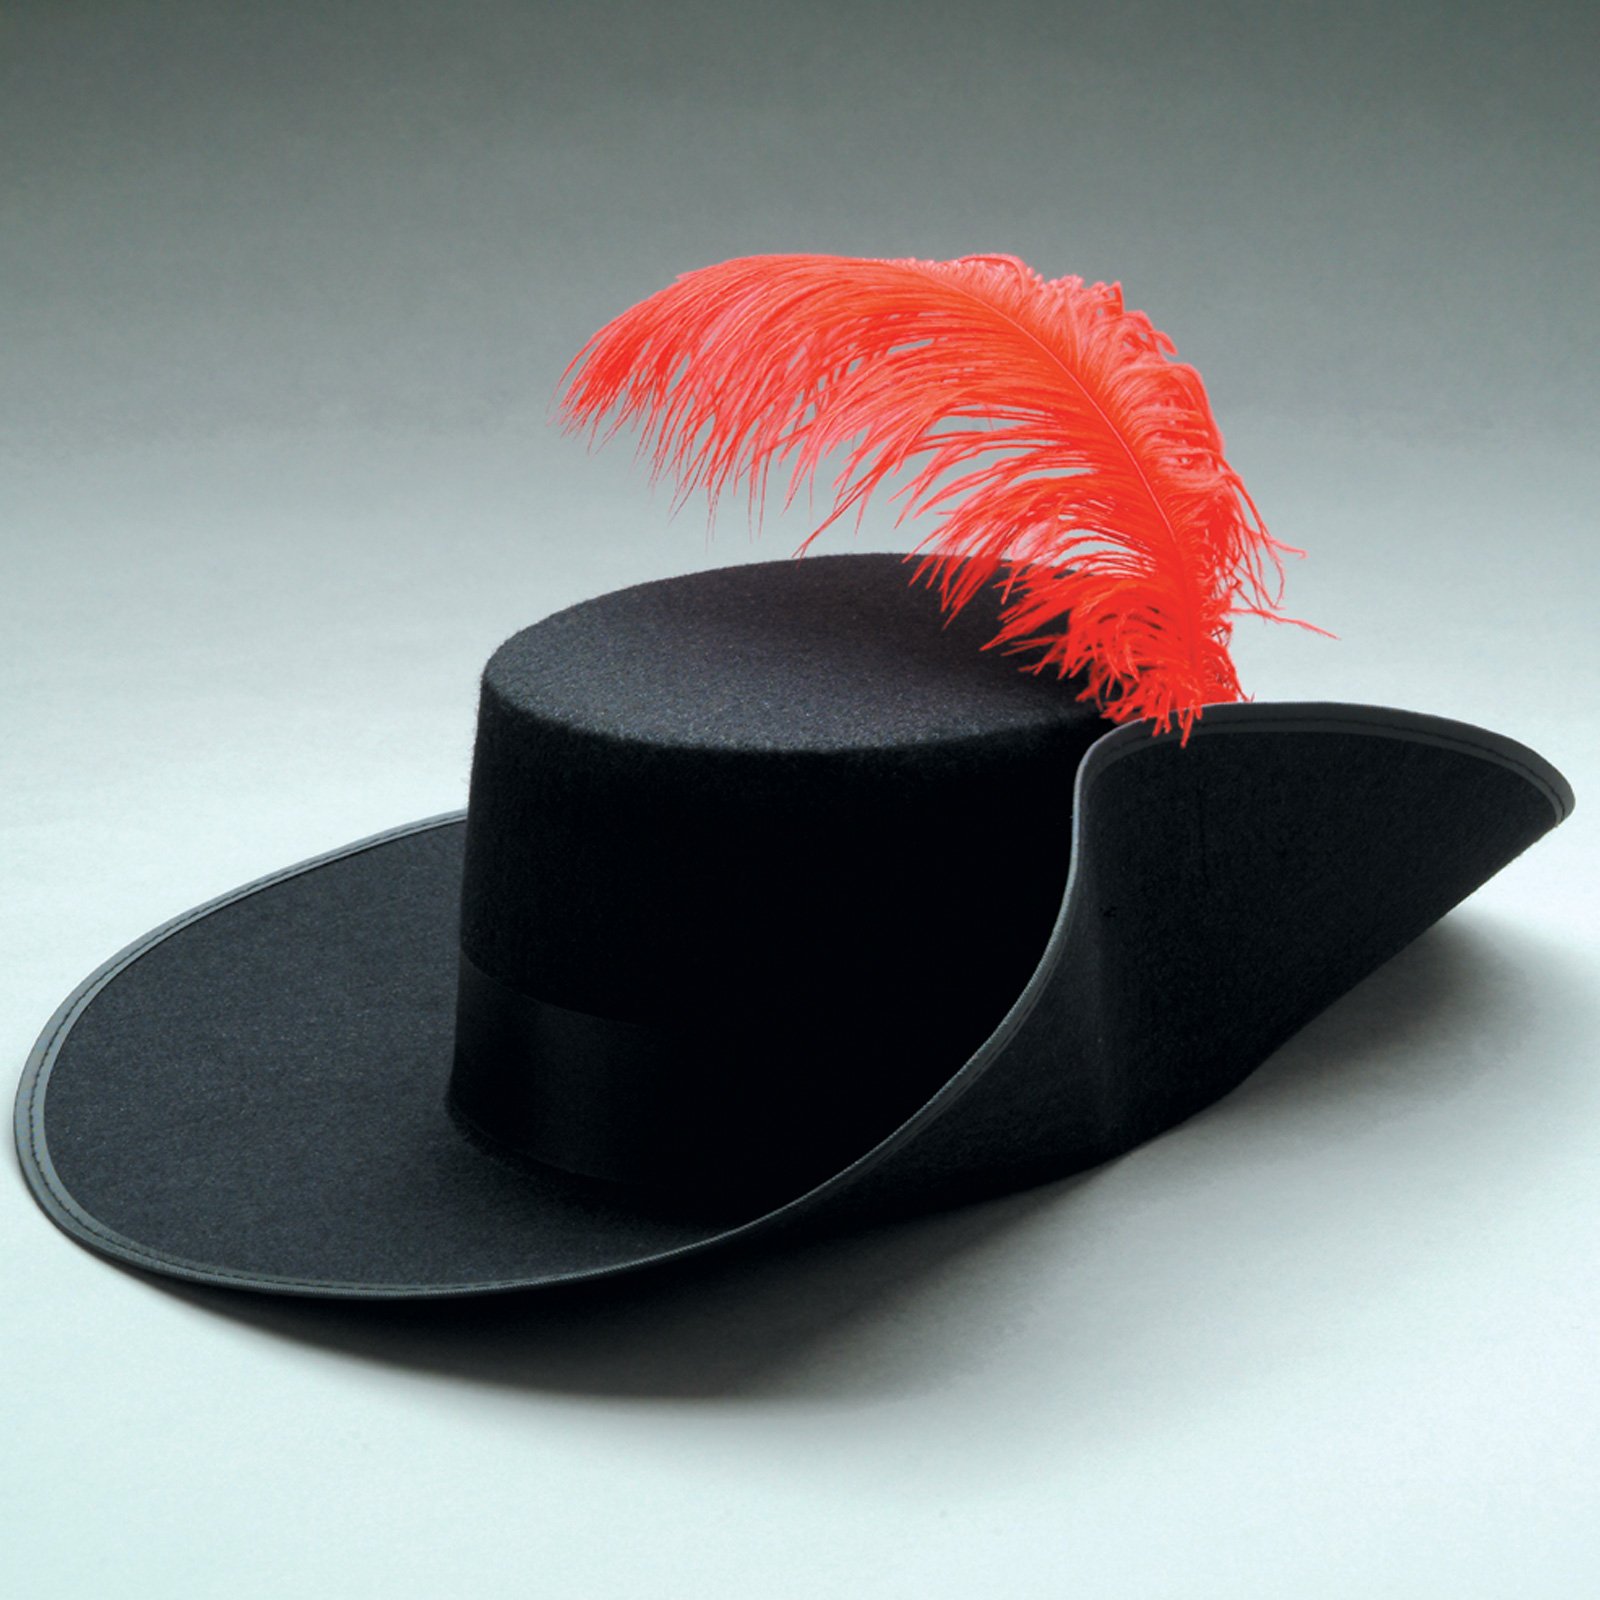 Image - Feather Hat.jpg | UnitedGamers Wiki | FANDOM powered by Wikia